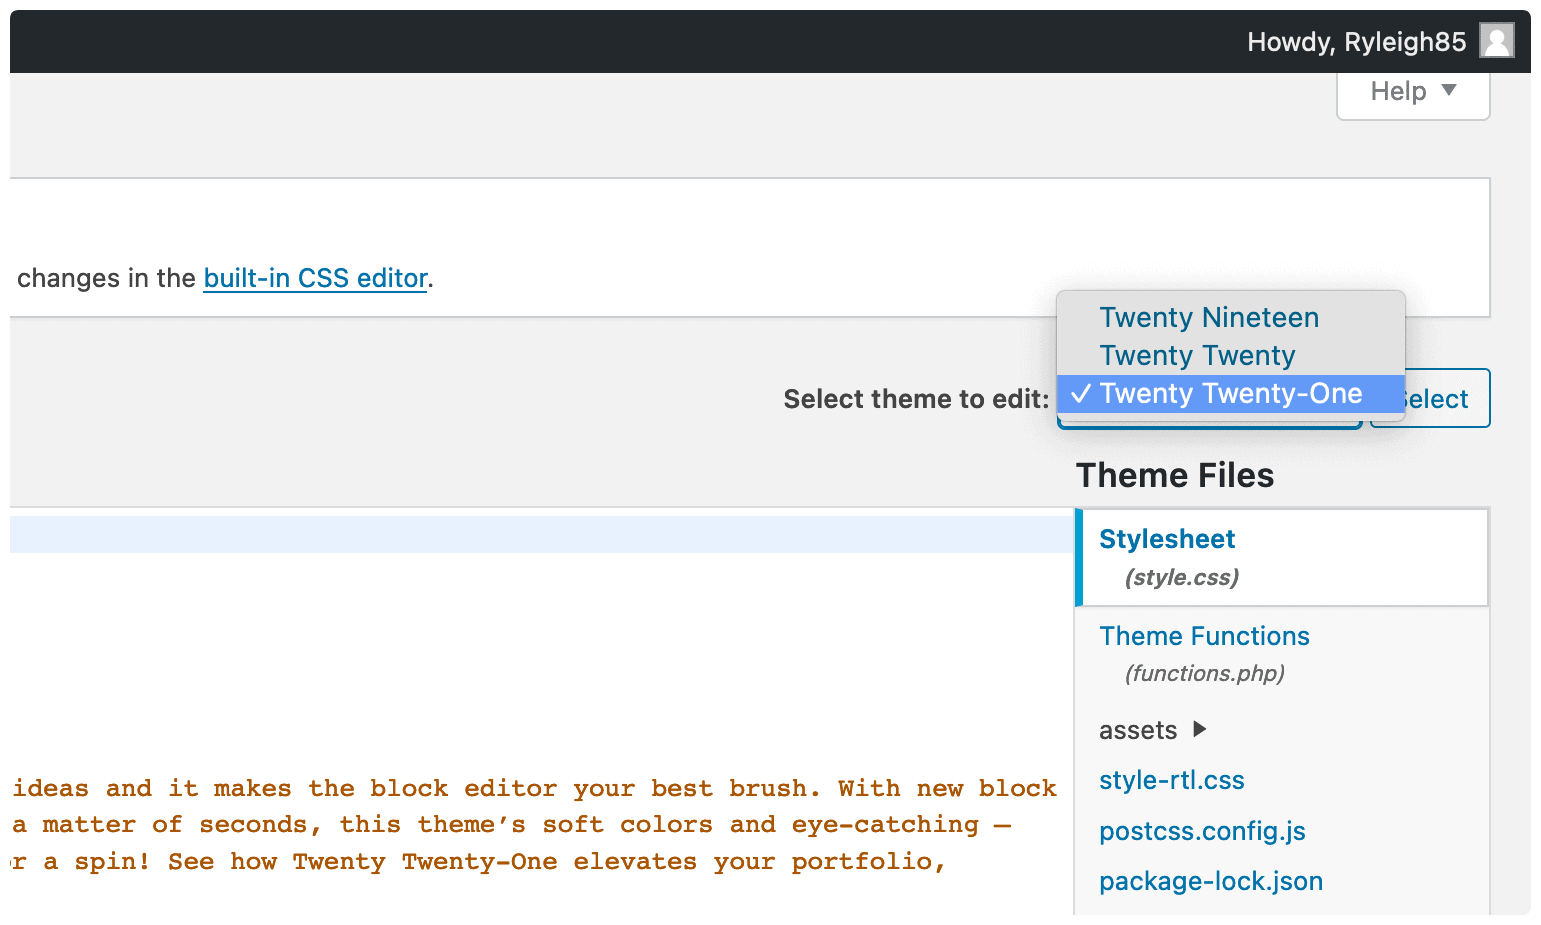 Choosing a theme within WordPress' Theme Editor.